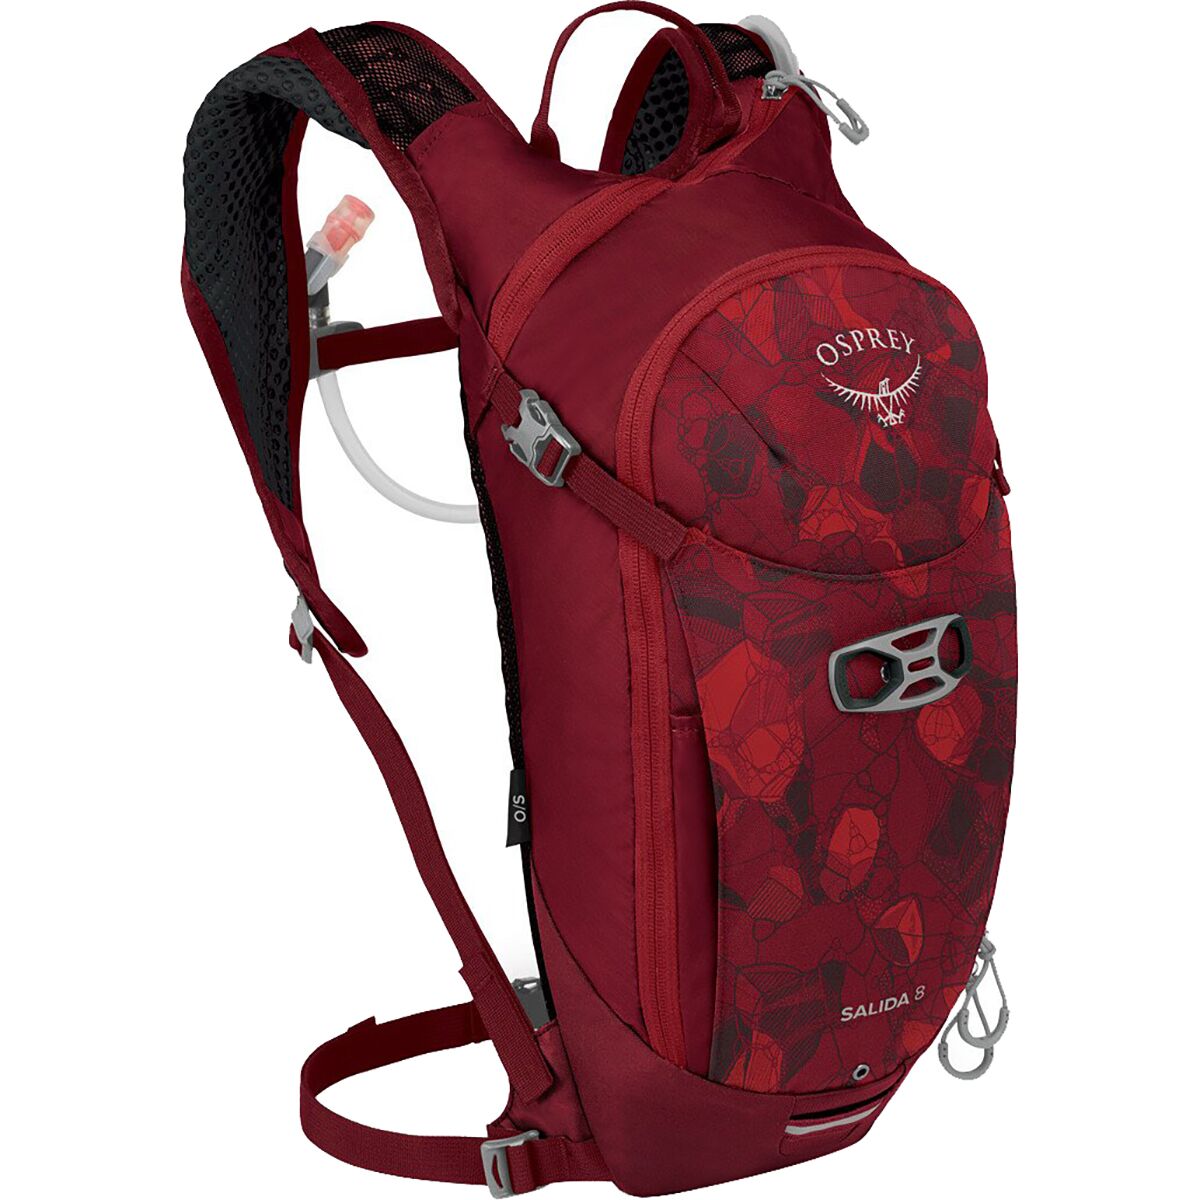 Osprey Packs Salida 8L Backpack - Women's Claret Red, One Size